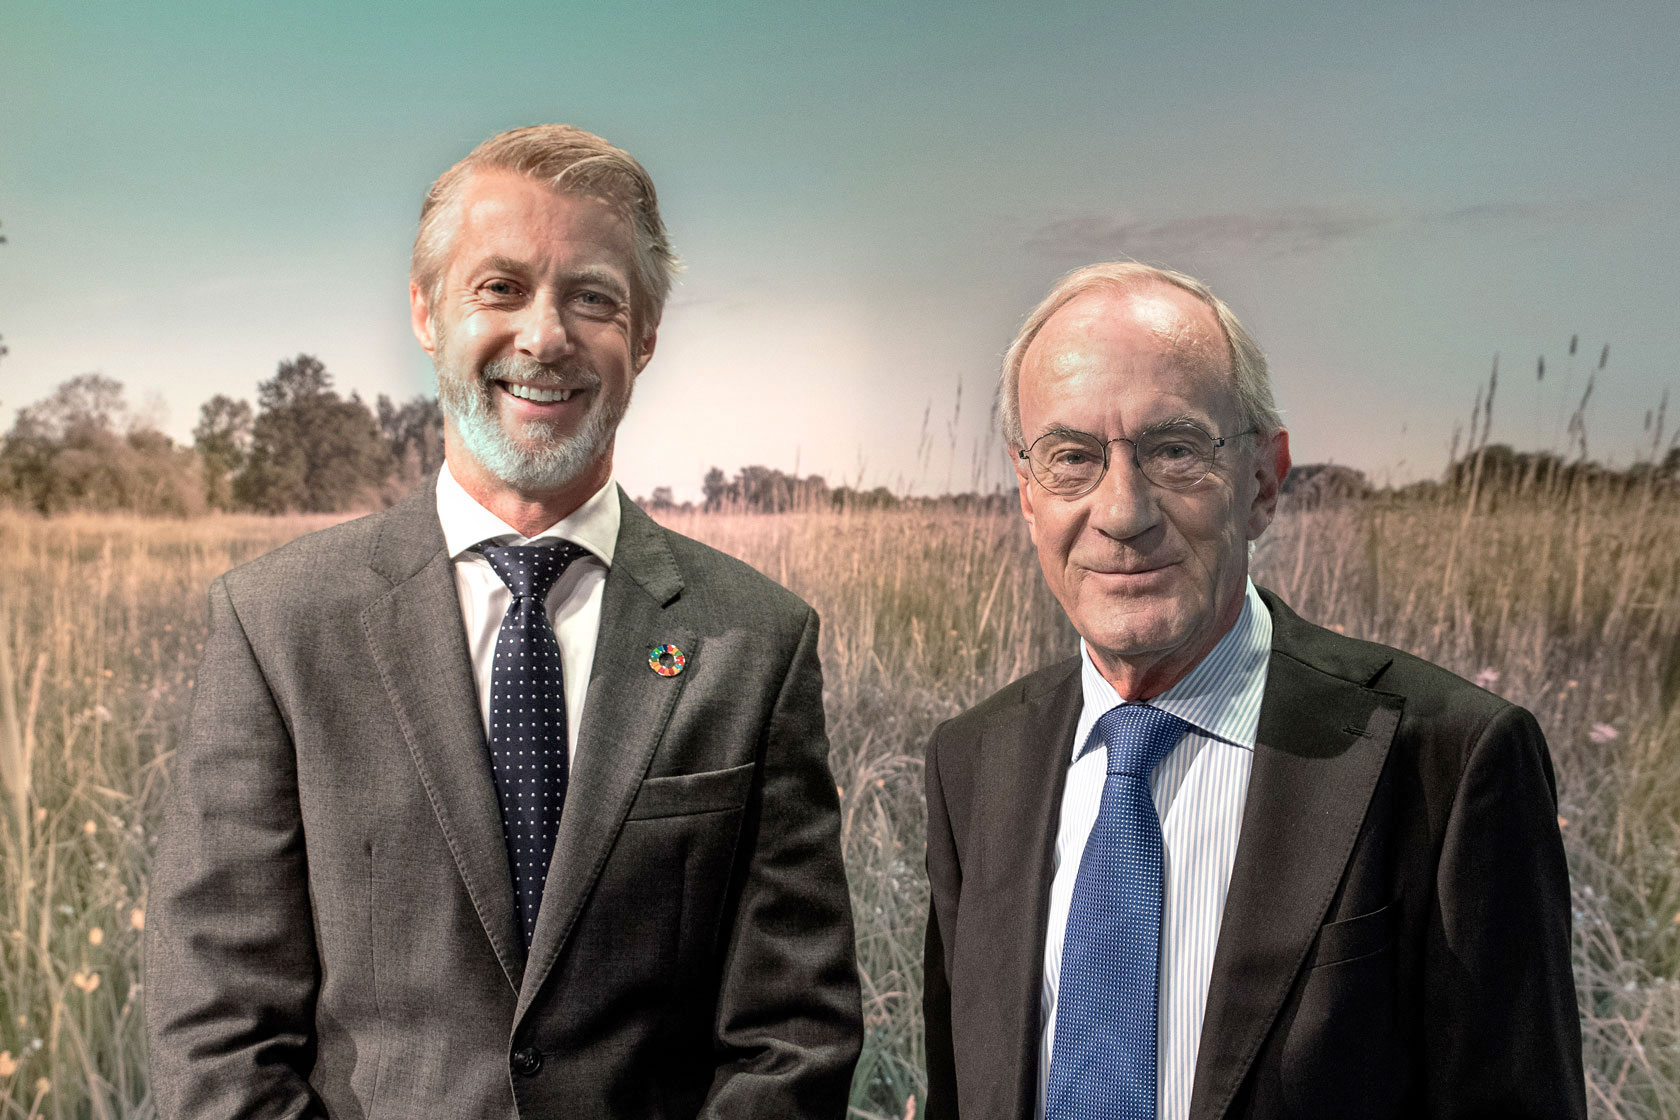 The new chairman Mats Granryd and the former chairman Lars G Nordström